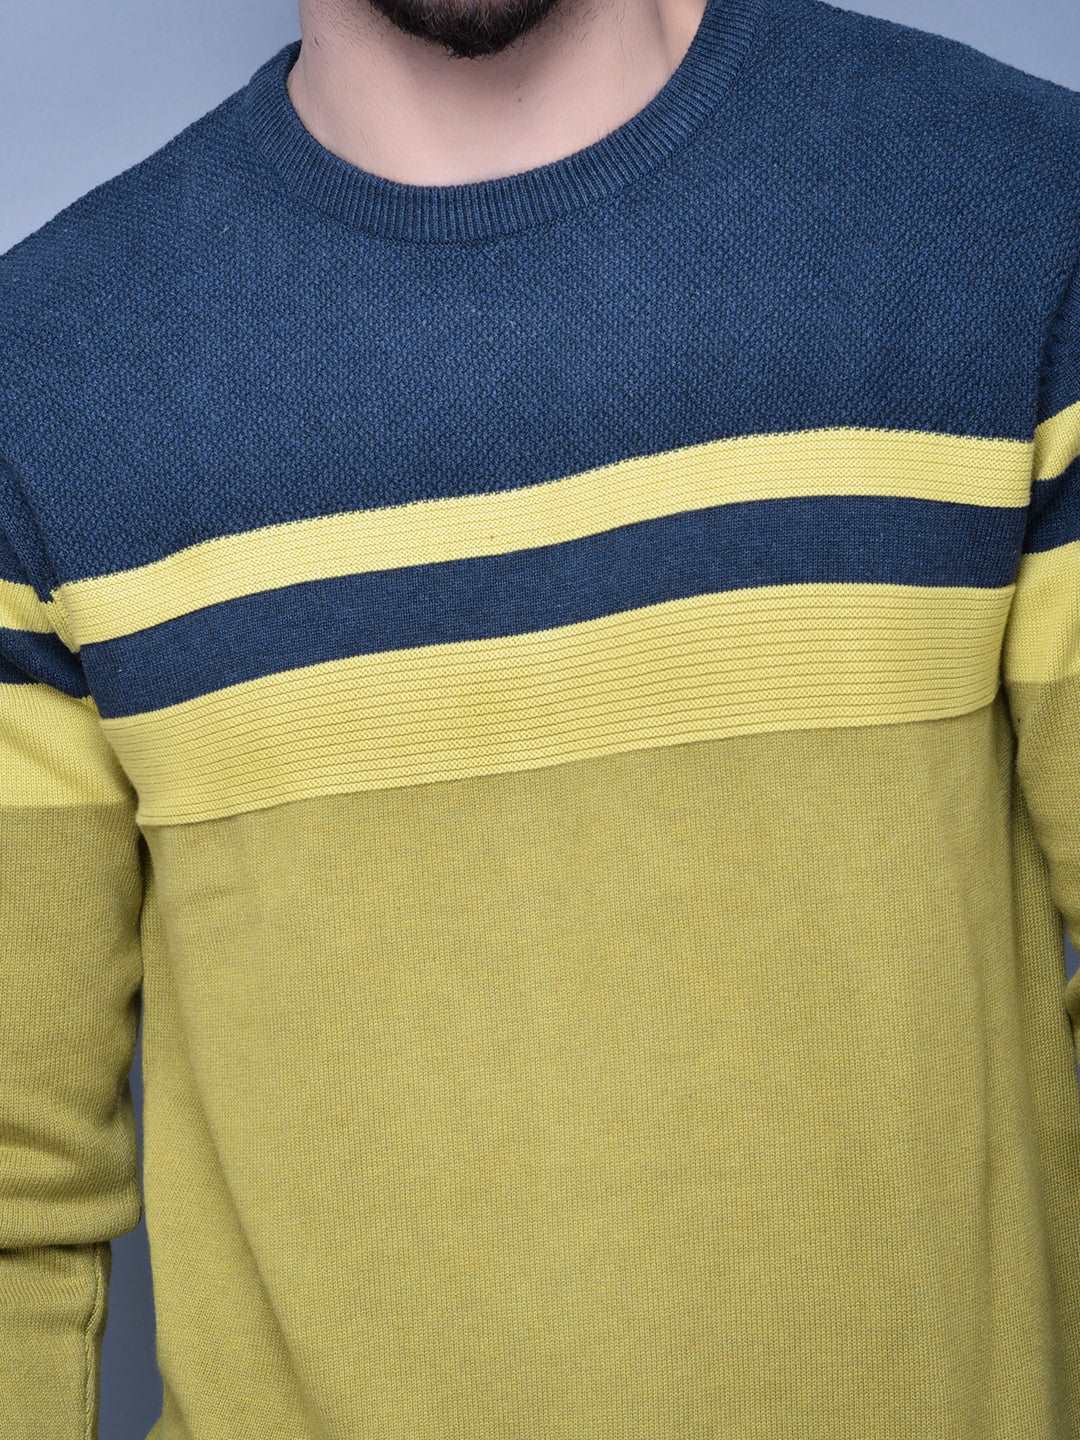 Cobb Green Striped Round Neck Sweater